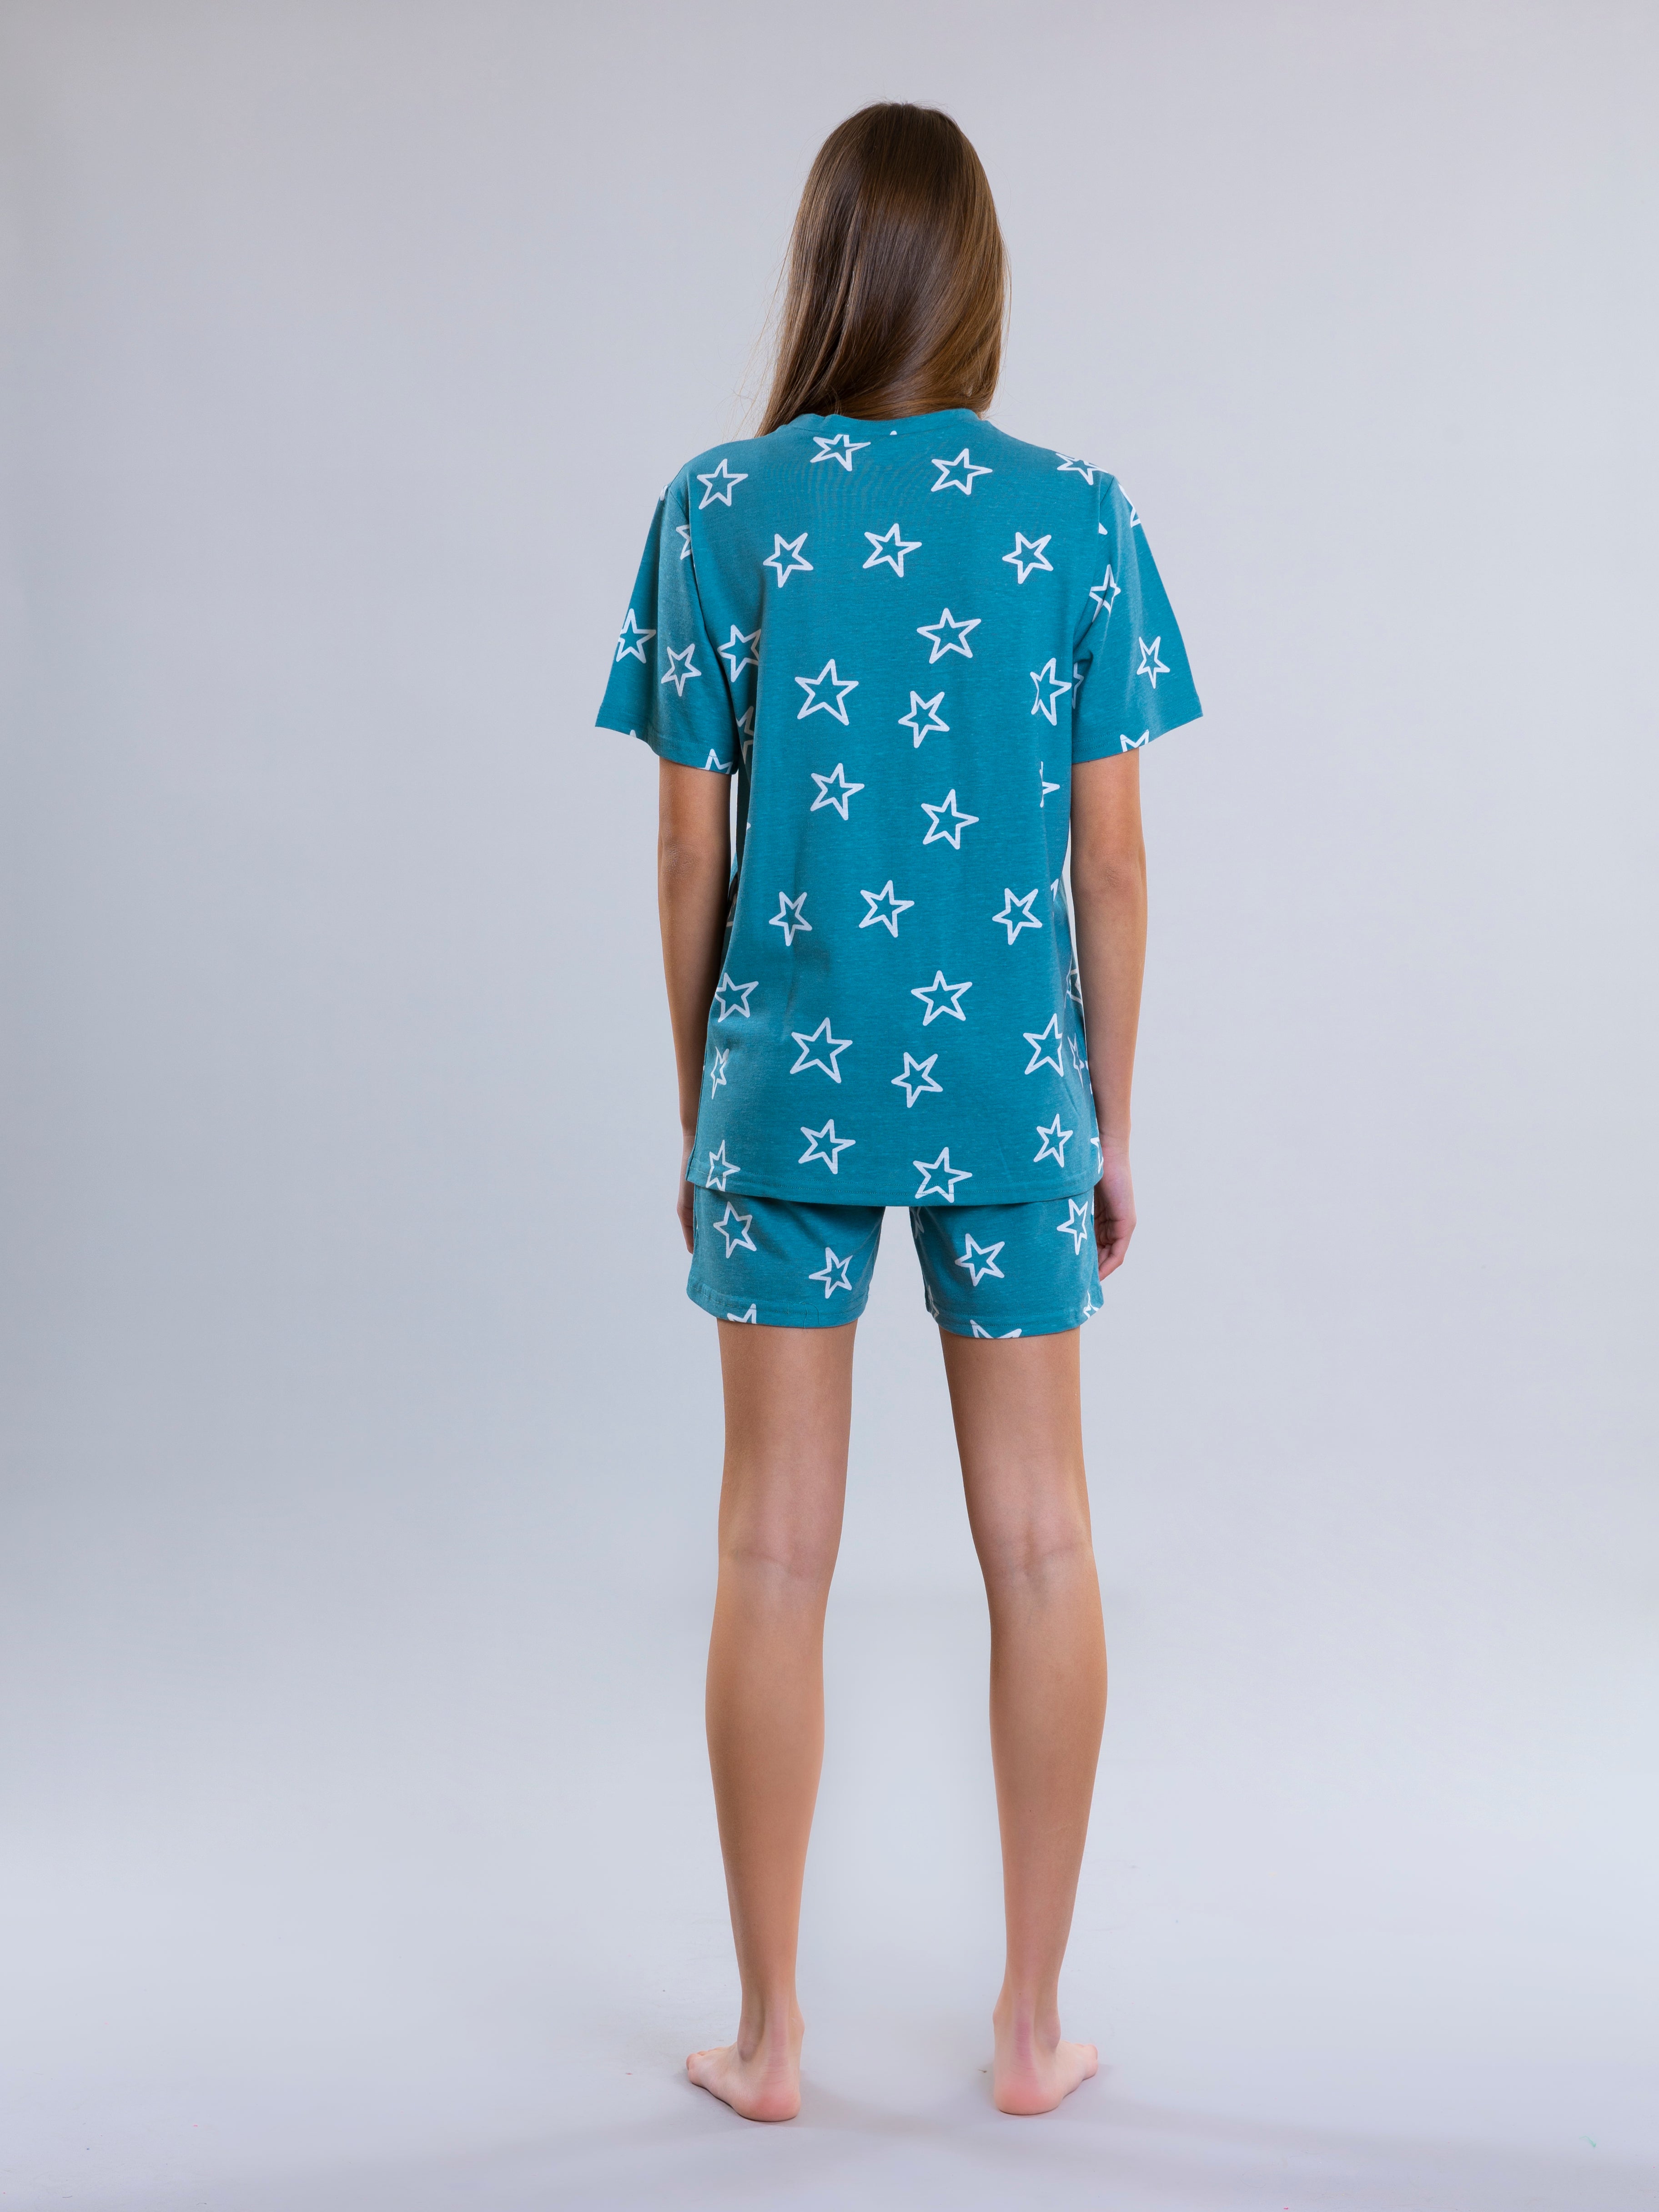 Star Design Pyjama Set For Women - Green